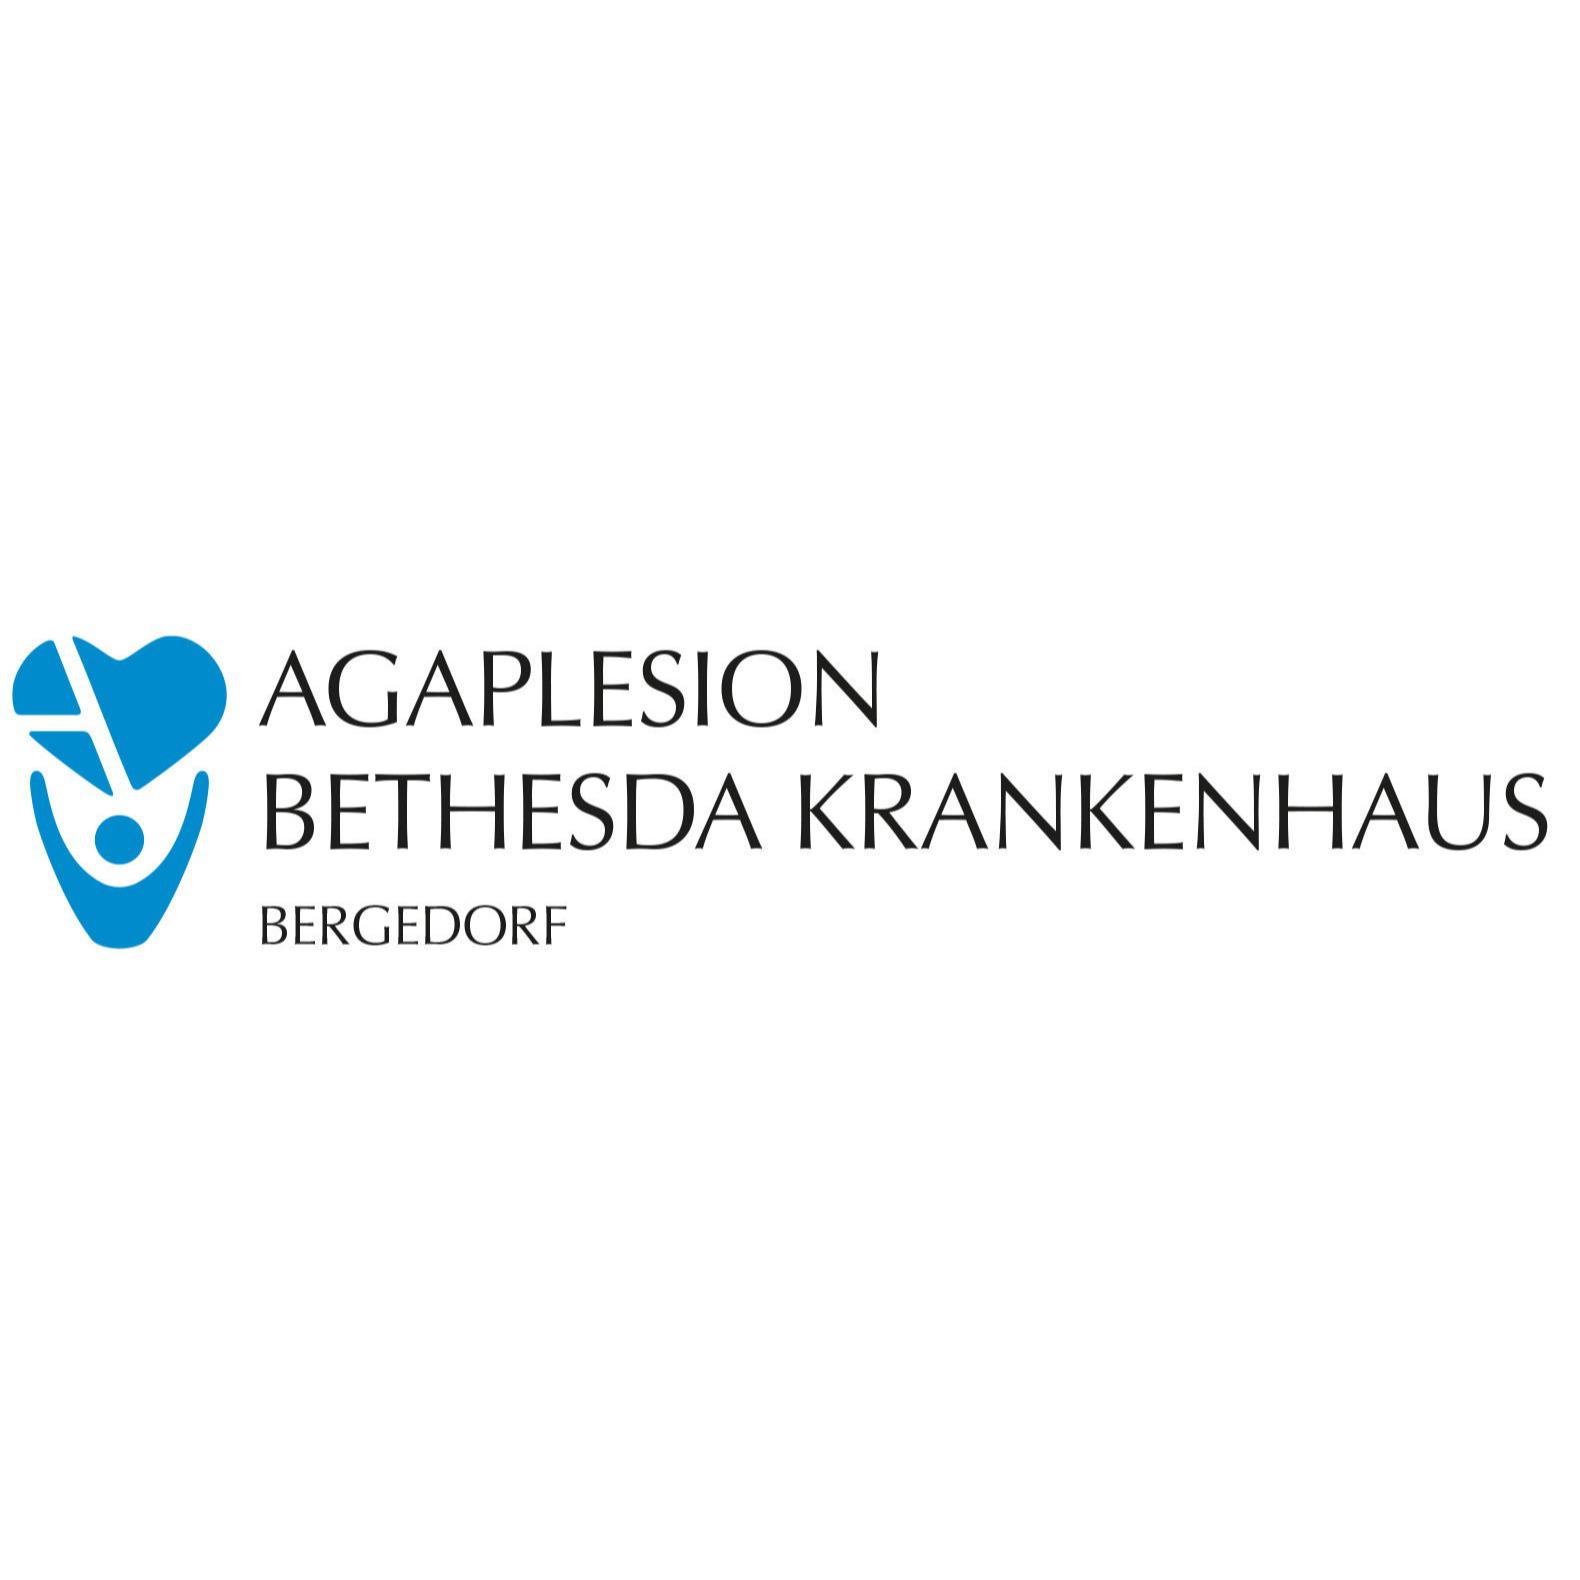 AGAPLESION BETHESDA KRANKENHAUS BERGEDORF in Hamburg - Logo